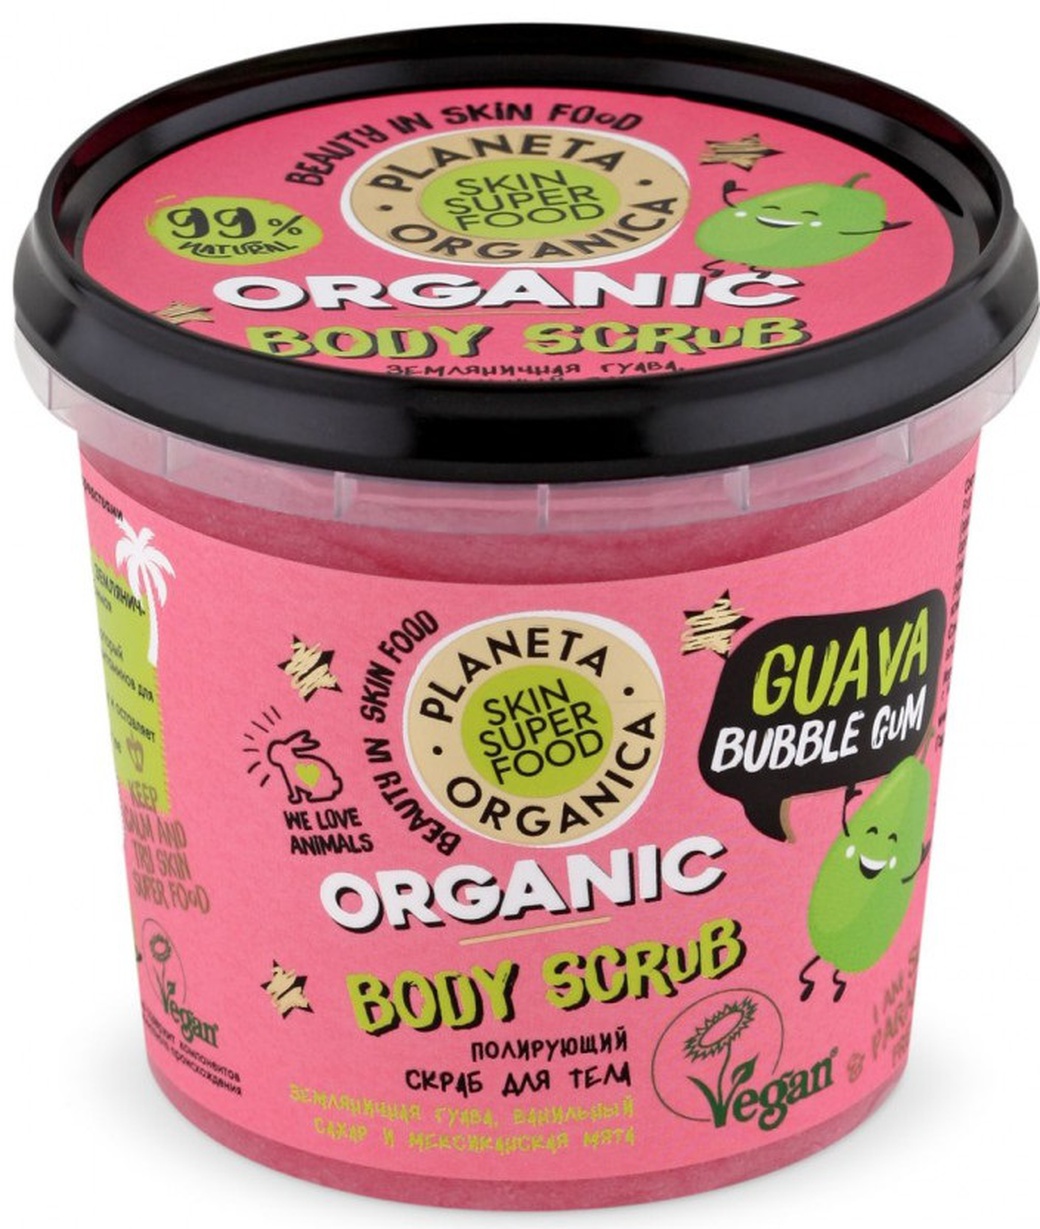 Planeta Organica Skin Super Food Скраб для тела Полирующий Guava bubble gum, 485 мл фото